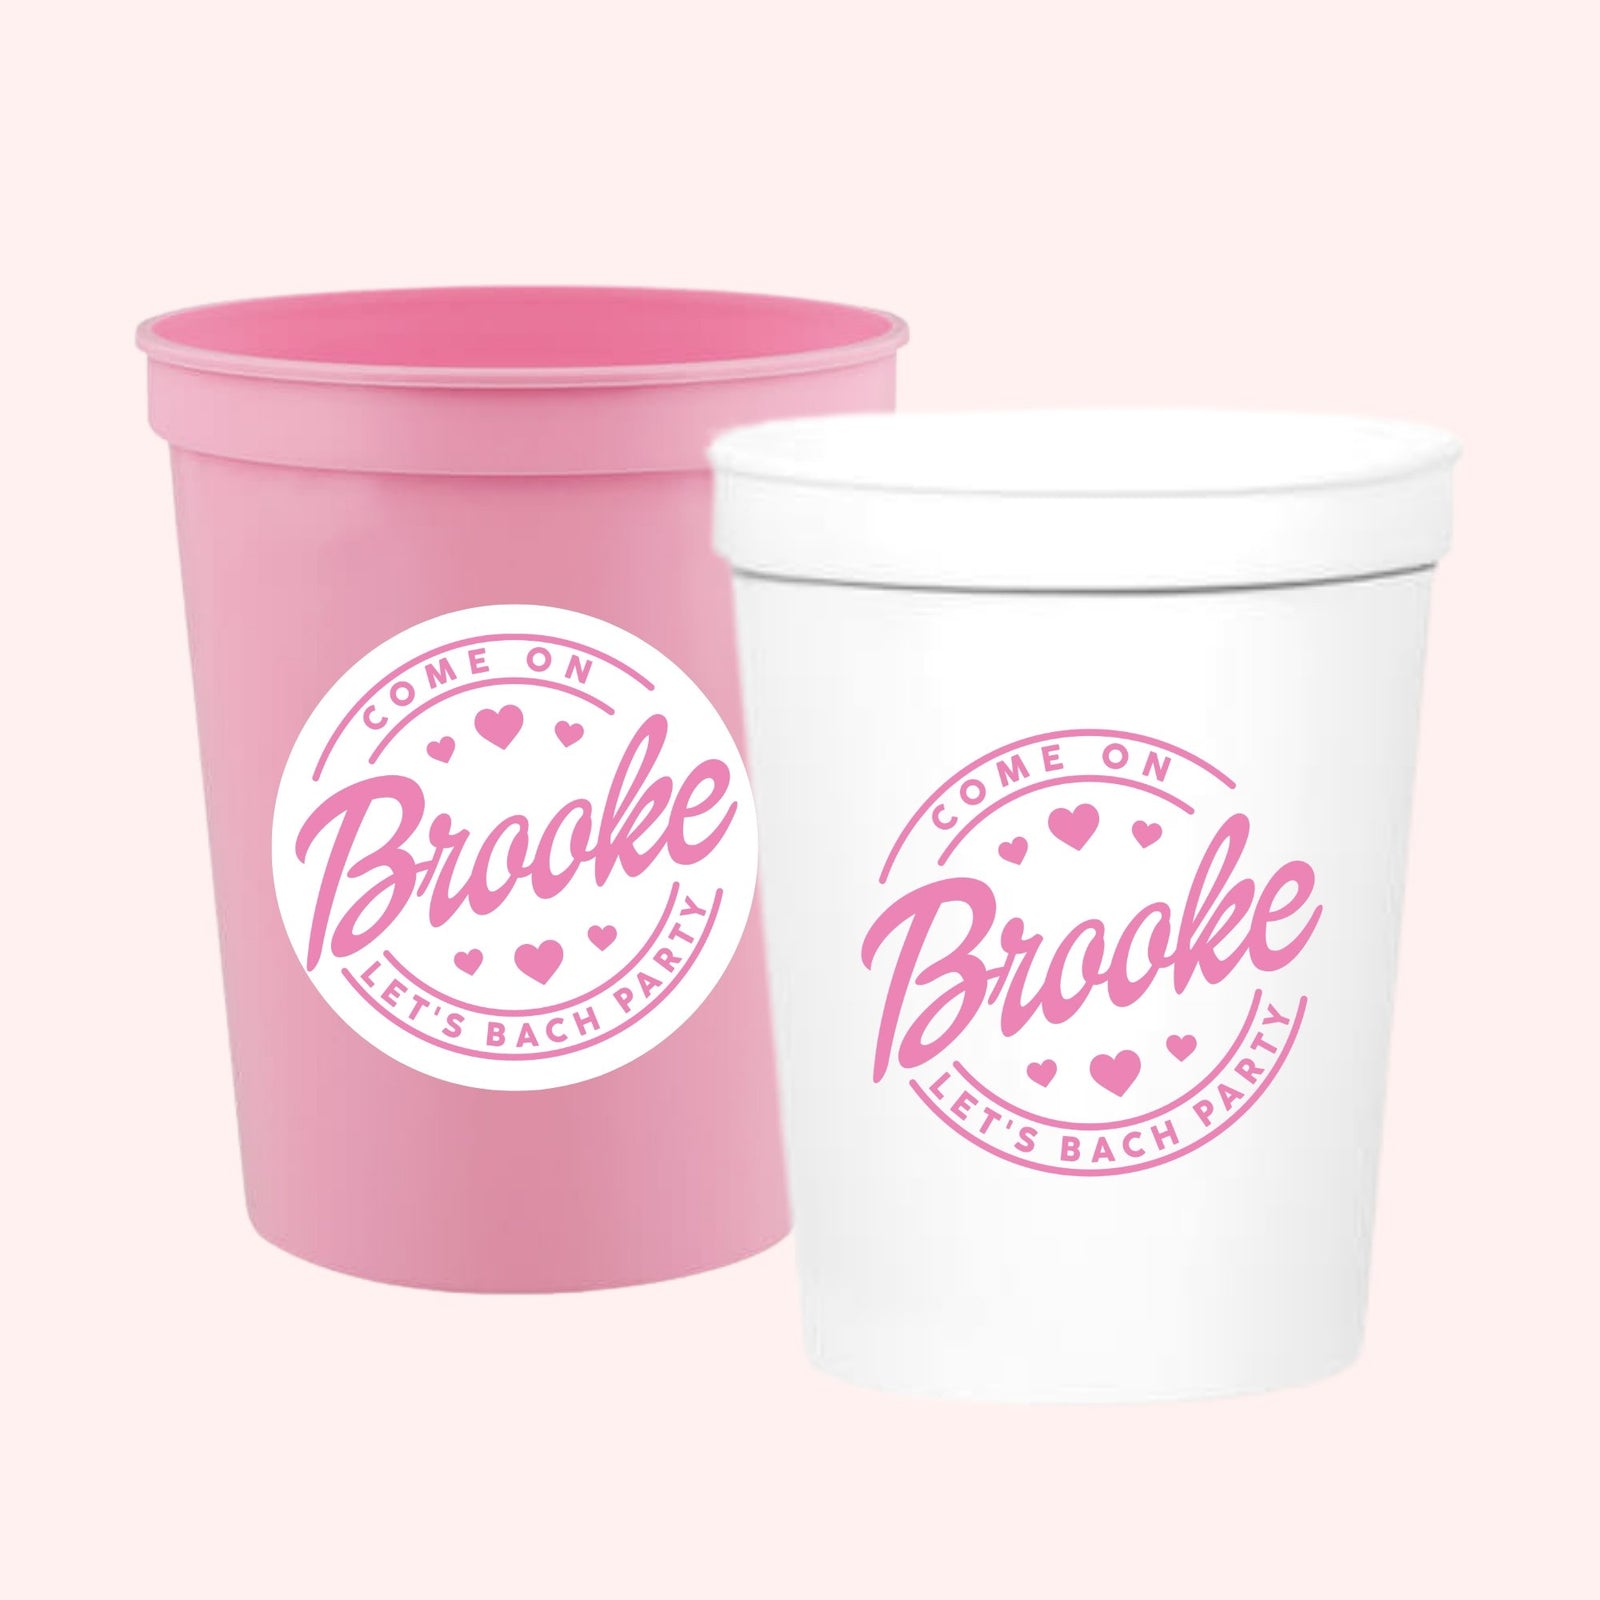 Let's Go Party Barbie Pink Sprinkle Mix, 4 oz Jar (NET Vol. 1/2 Cup)